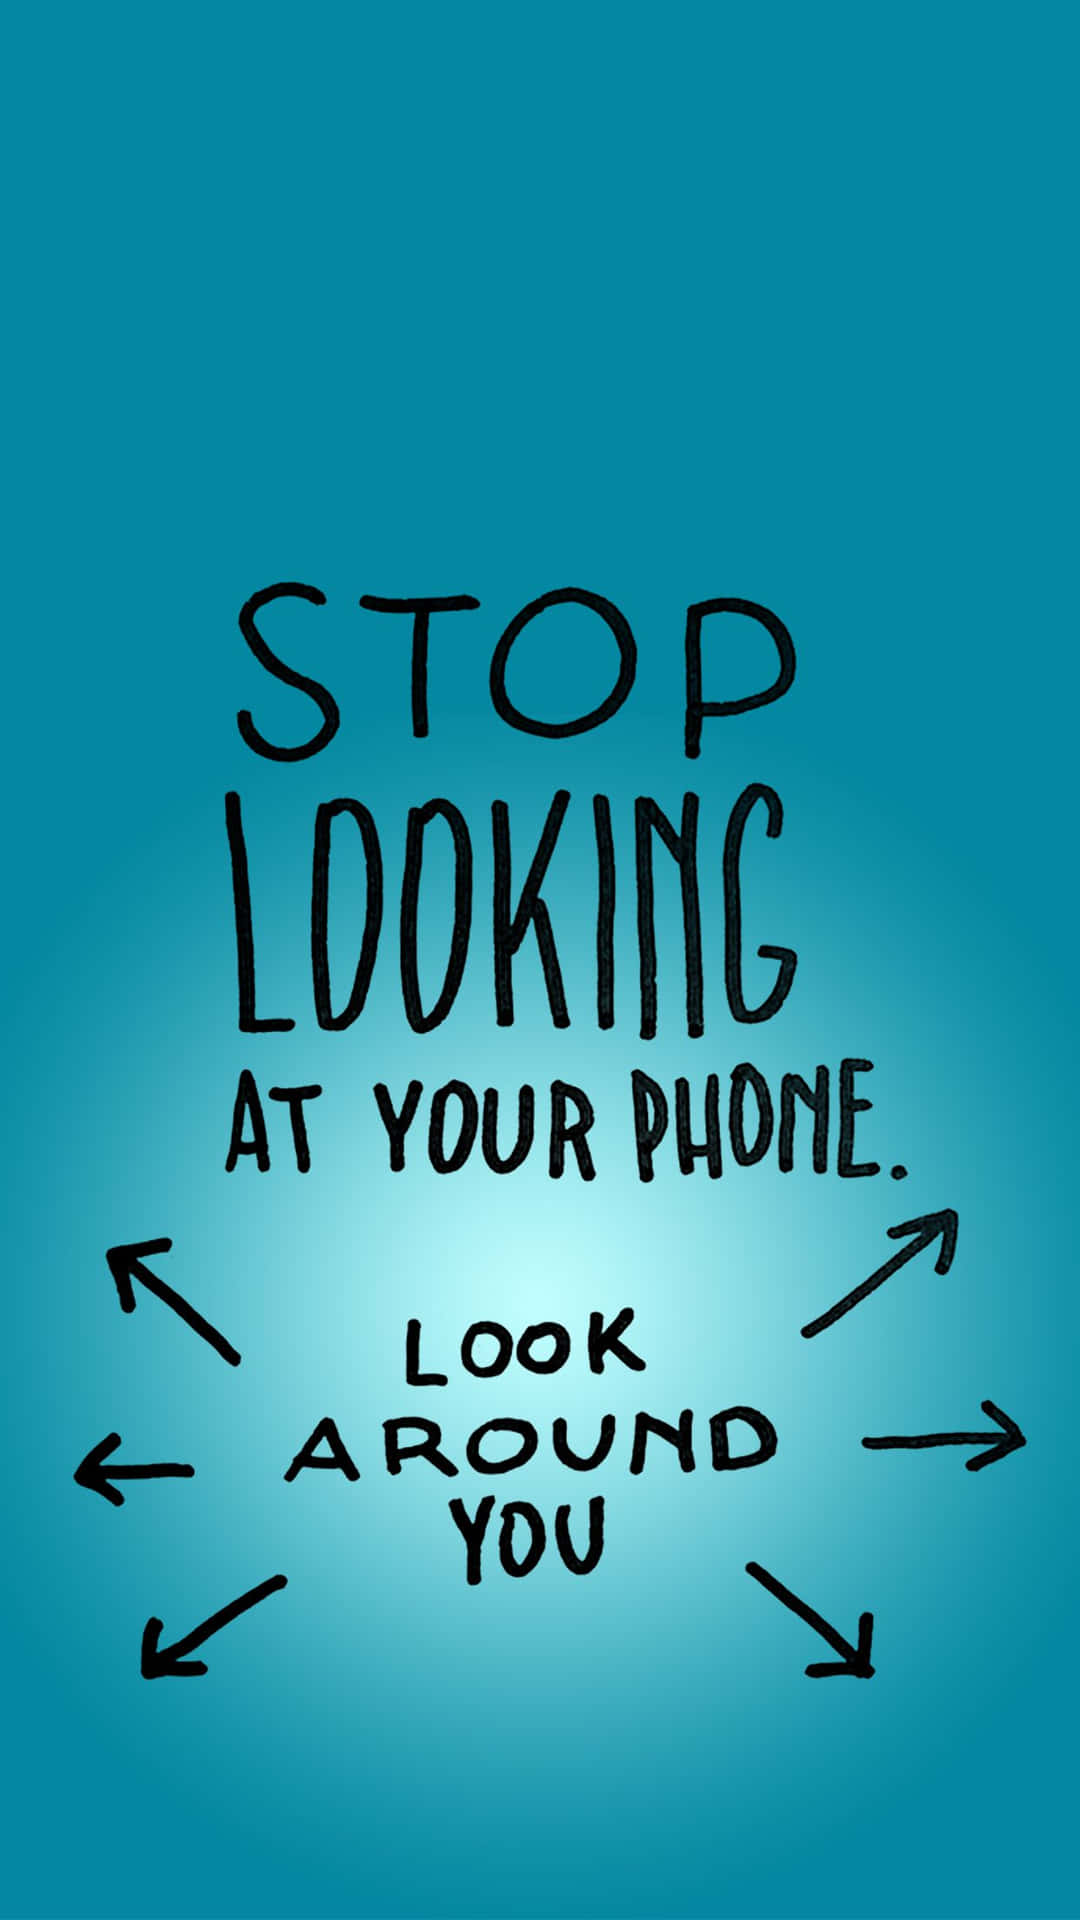 Phone Addiction Poster Wallpaper